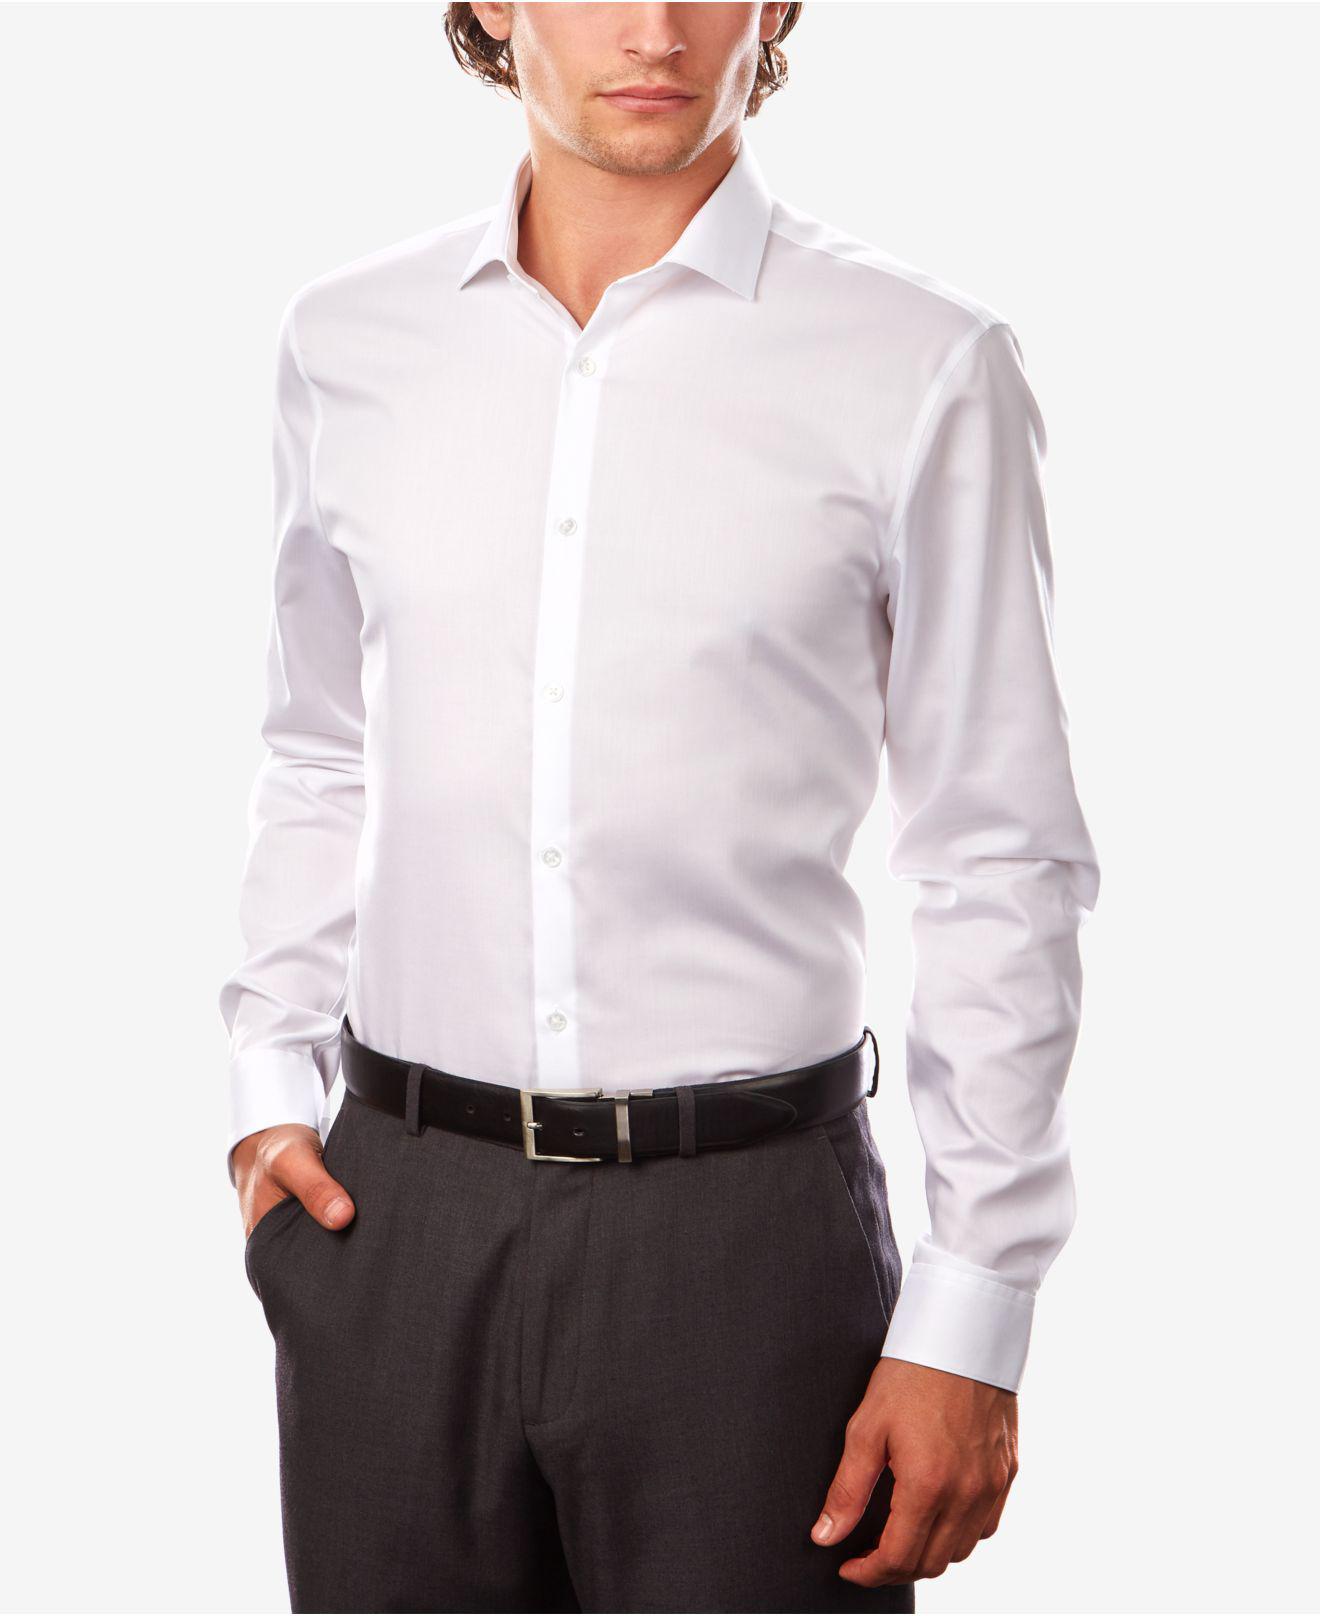 Calvin Klein Cotton Steel Extra-slim Fit Non-iron Performance Herringbone  Dress Shirt in White for Men - Save 59% | Lyst